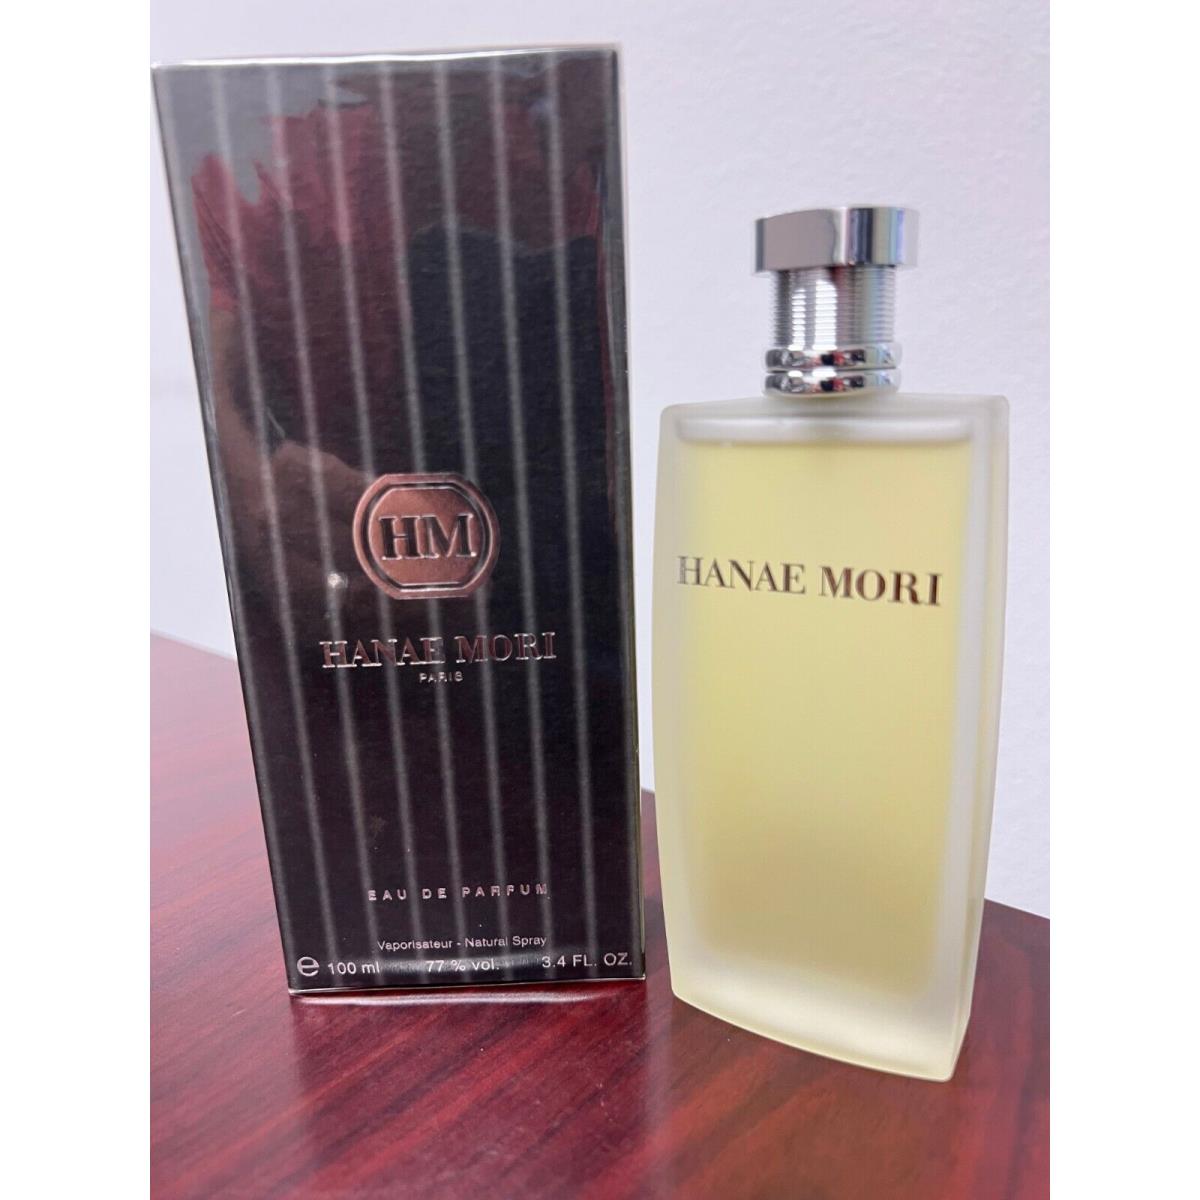 HM Hanae Mori by Hanae Mori 3.4 FL oz / 100 ML Eau De Parfum Spray Box